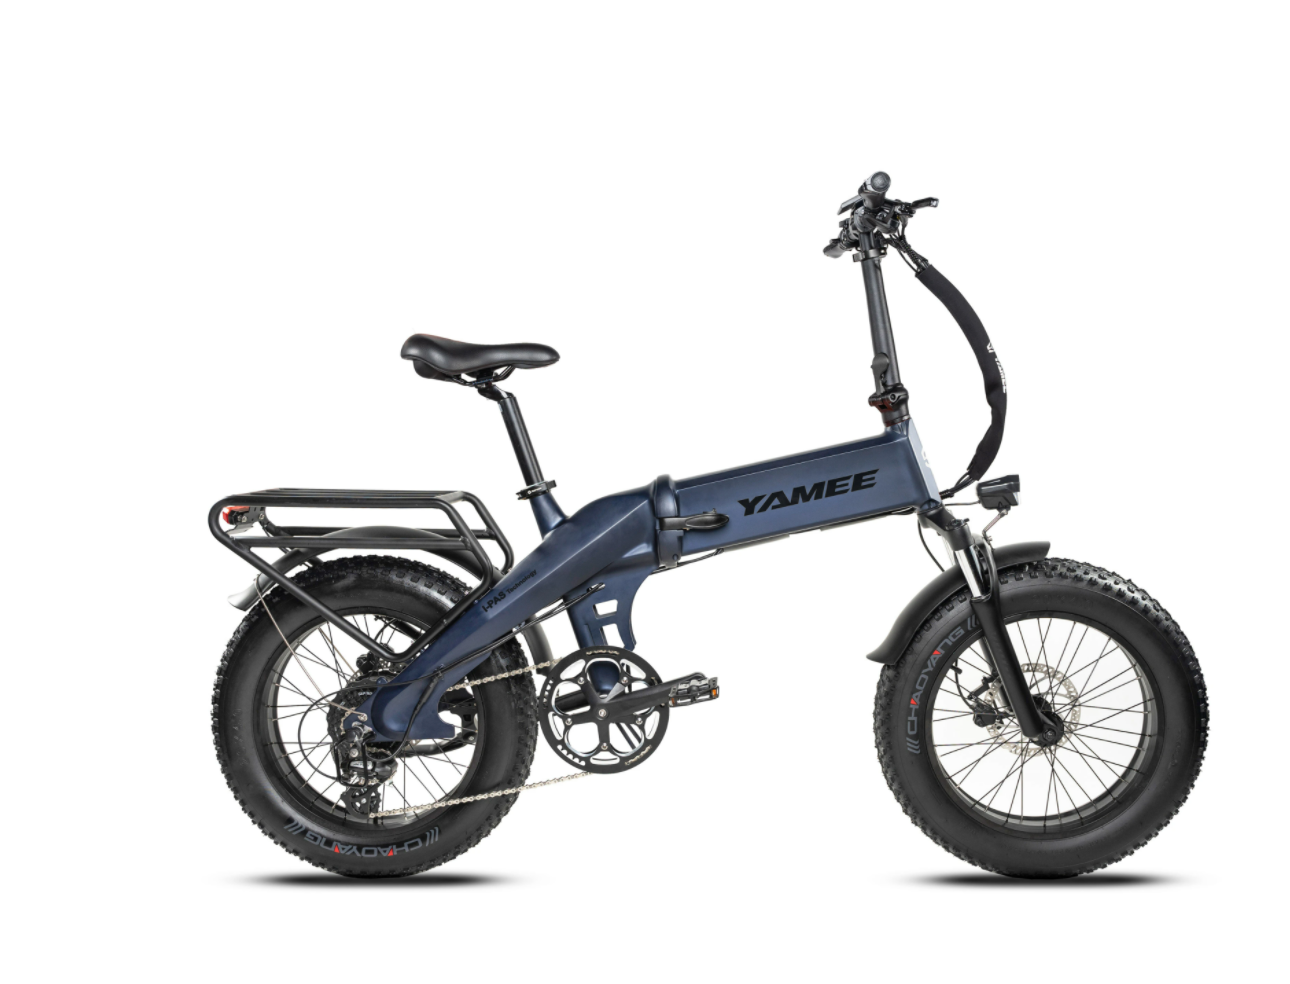 Yamee XL 750W Folding Electric Bike [Pre-order]